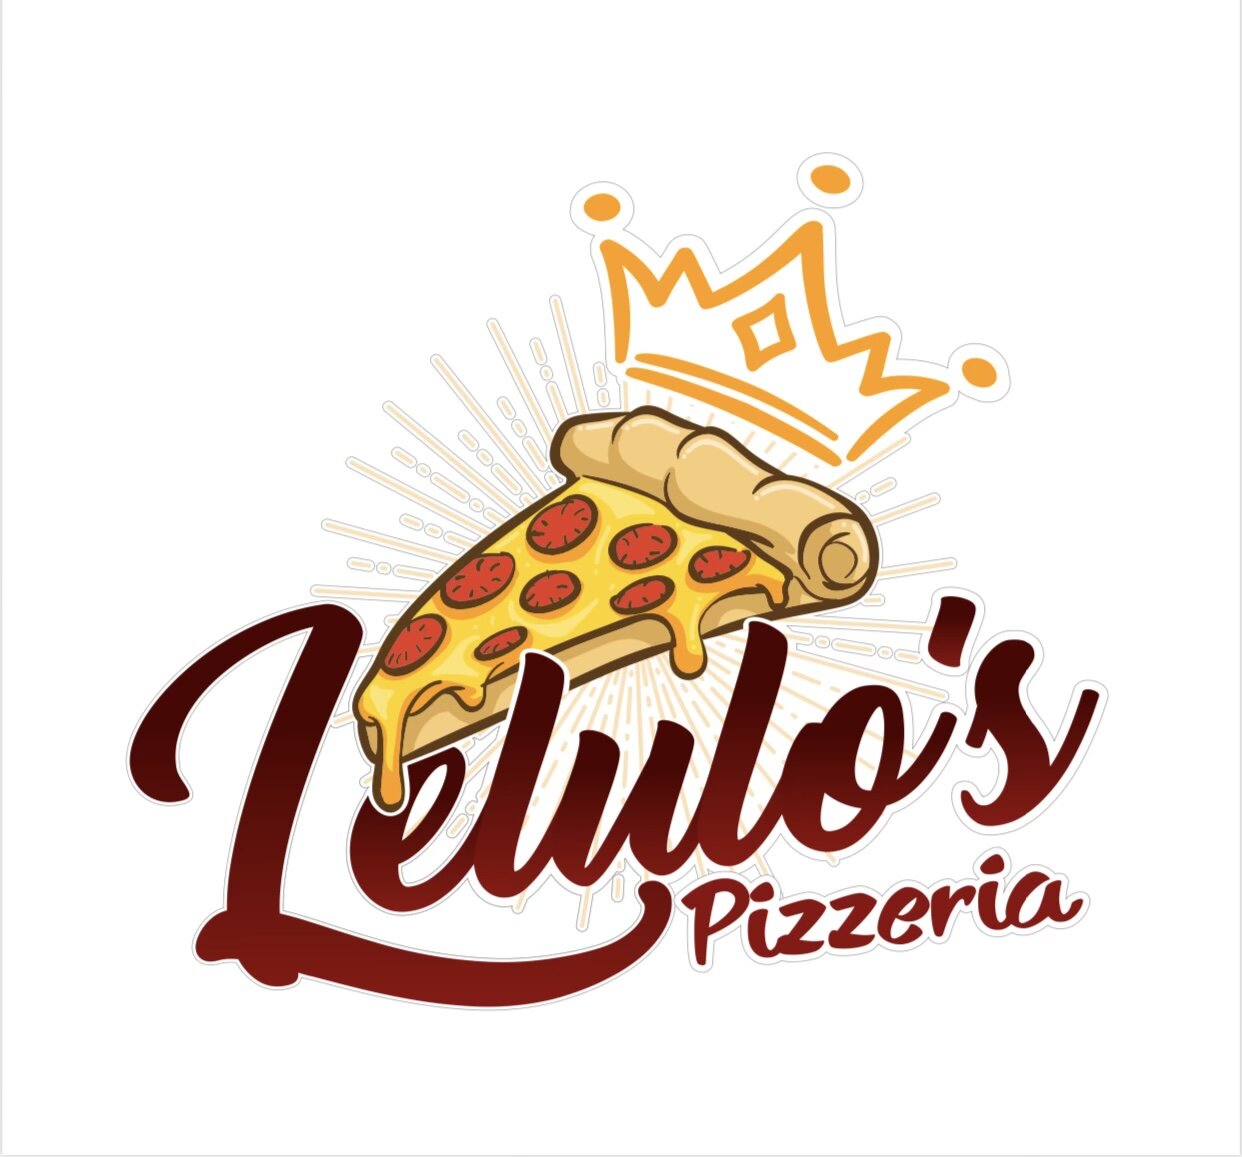 Lelulo's Pizzeria 